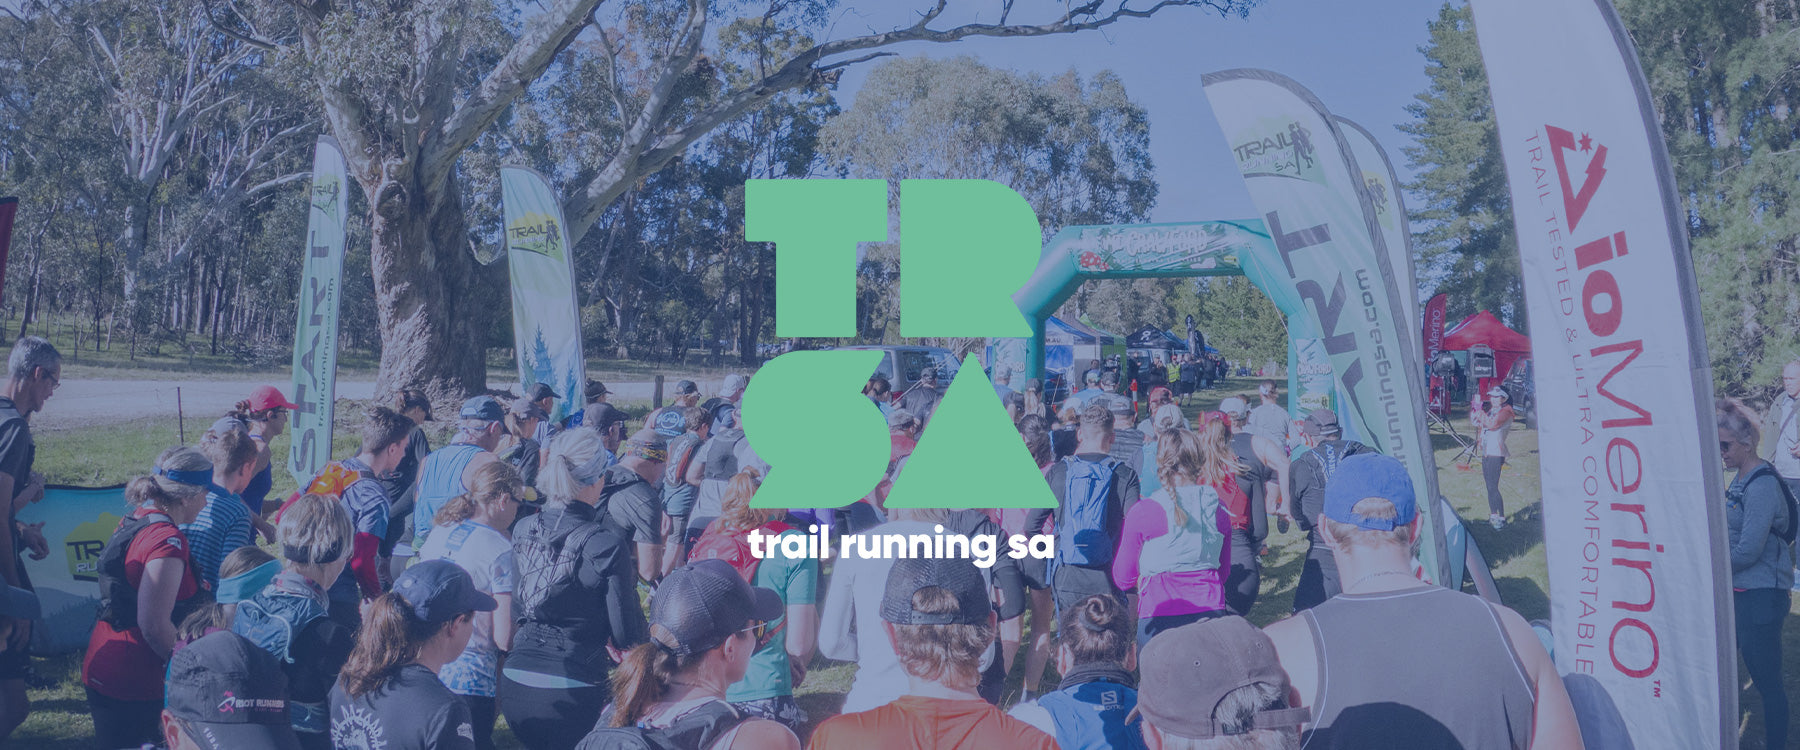 ioMerino X Trail Running South Australia